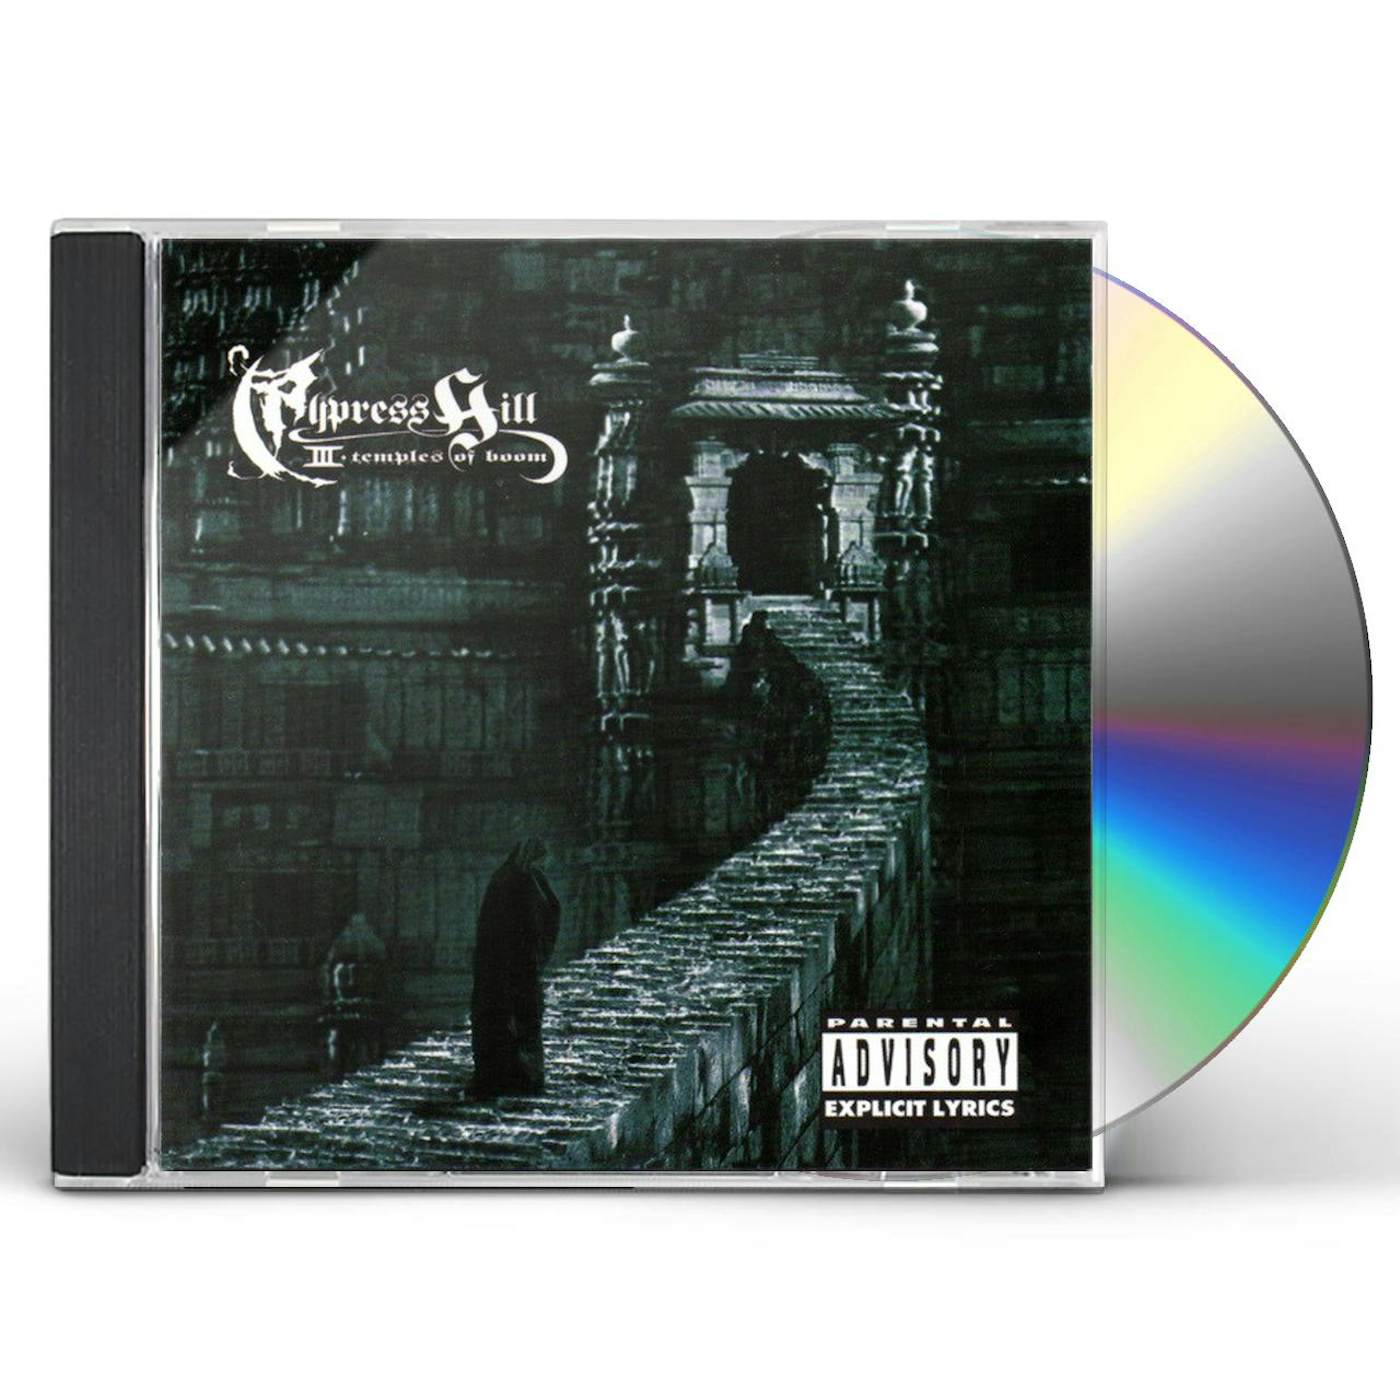 Cypress Hill III (TEMPLES OF BOOM) CD